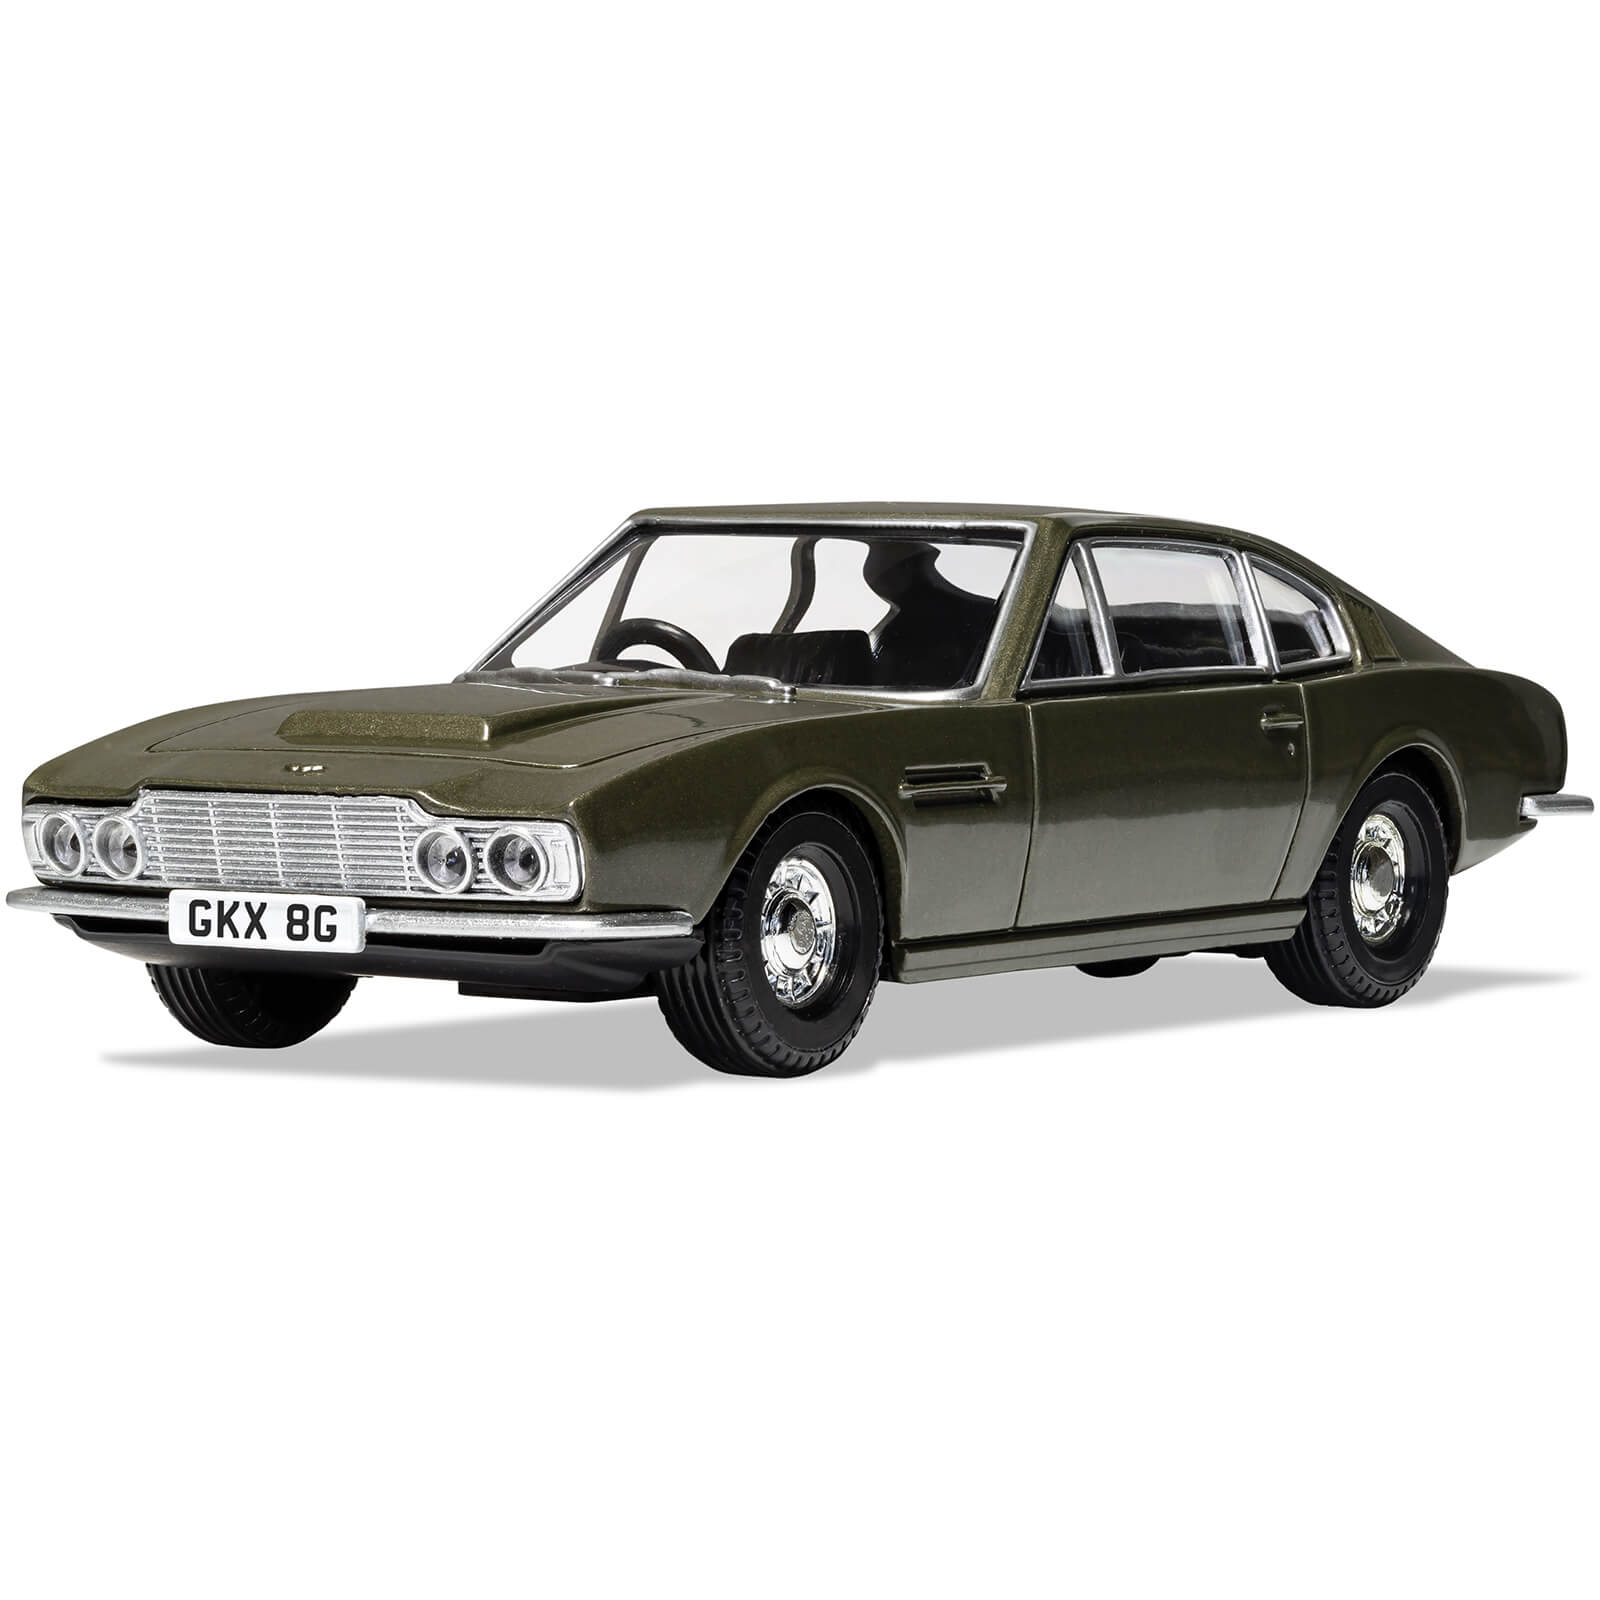 James Bond Aston Martin DBS Her Majesty's Secret Service Model Set - Scale 1:36